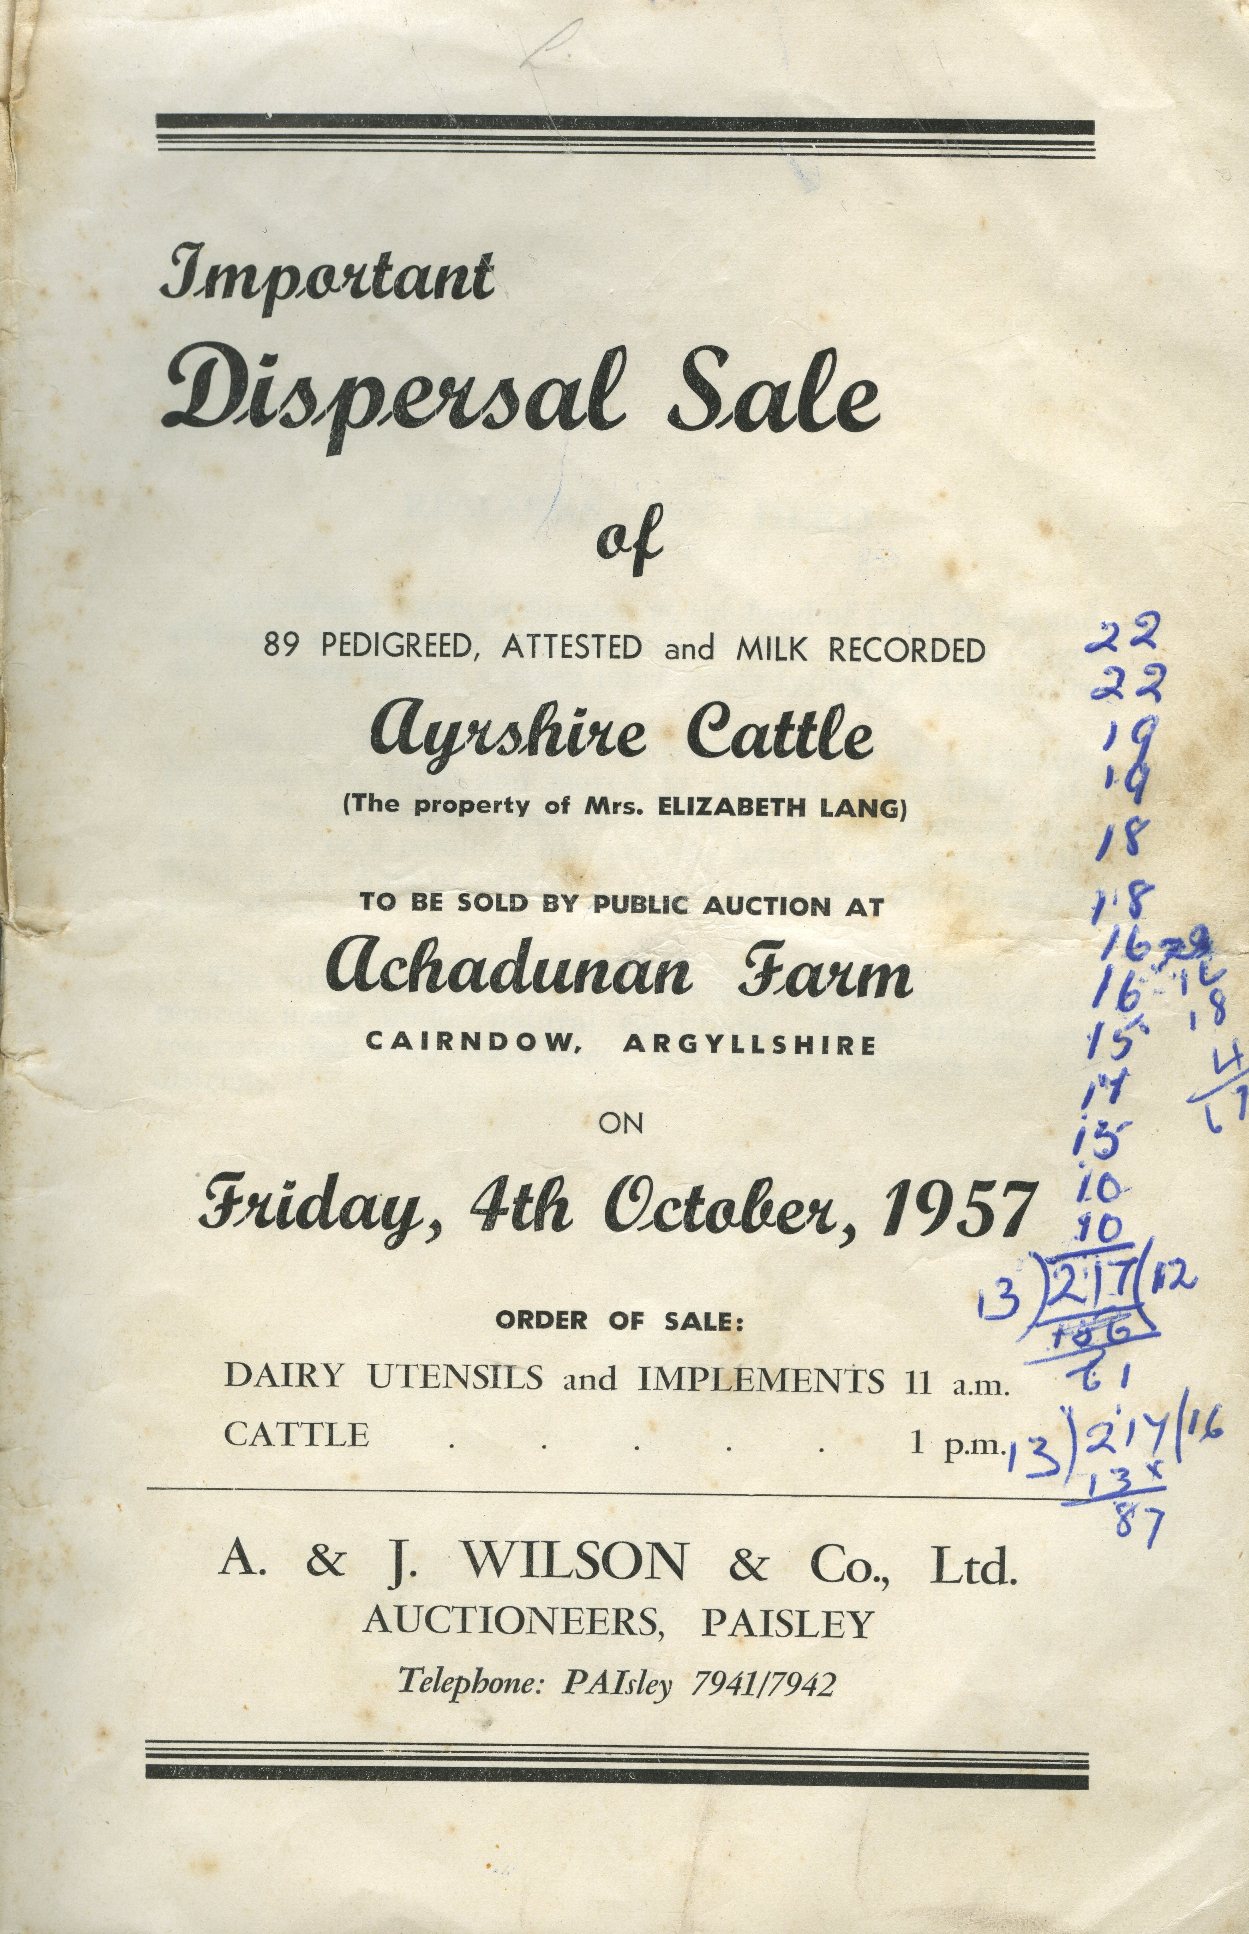 Dispersal Sale Achadunan